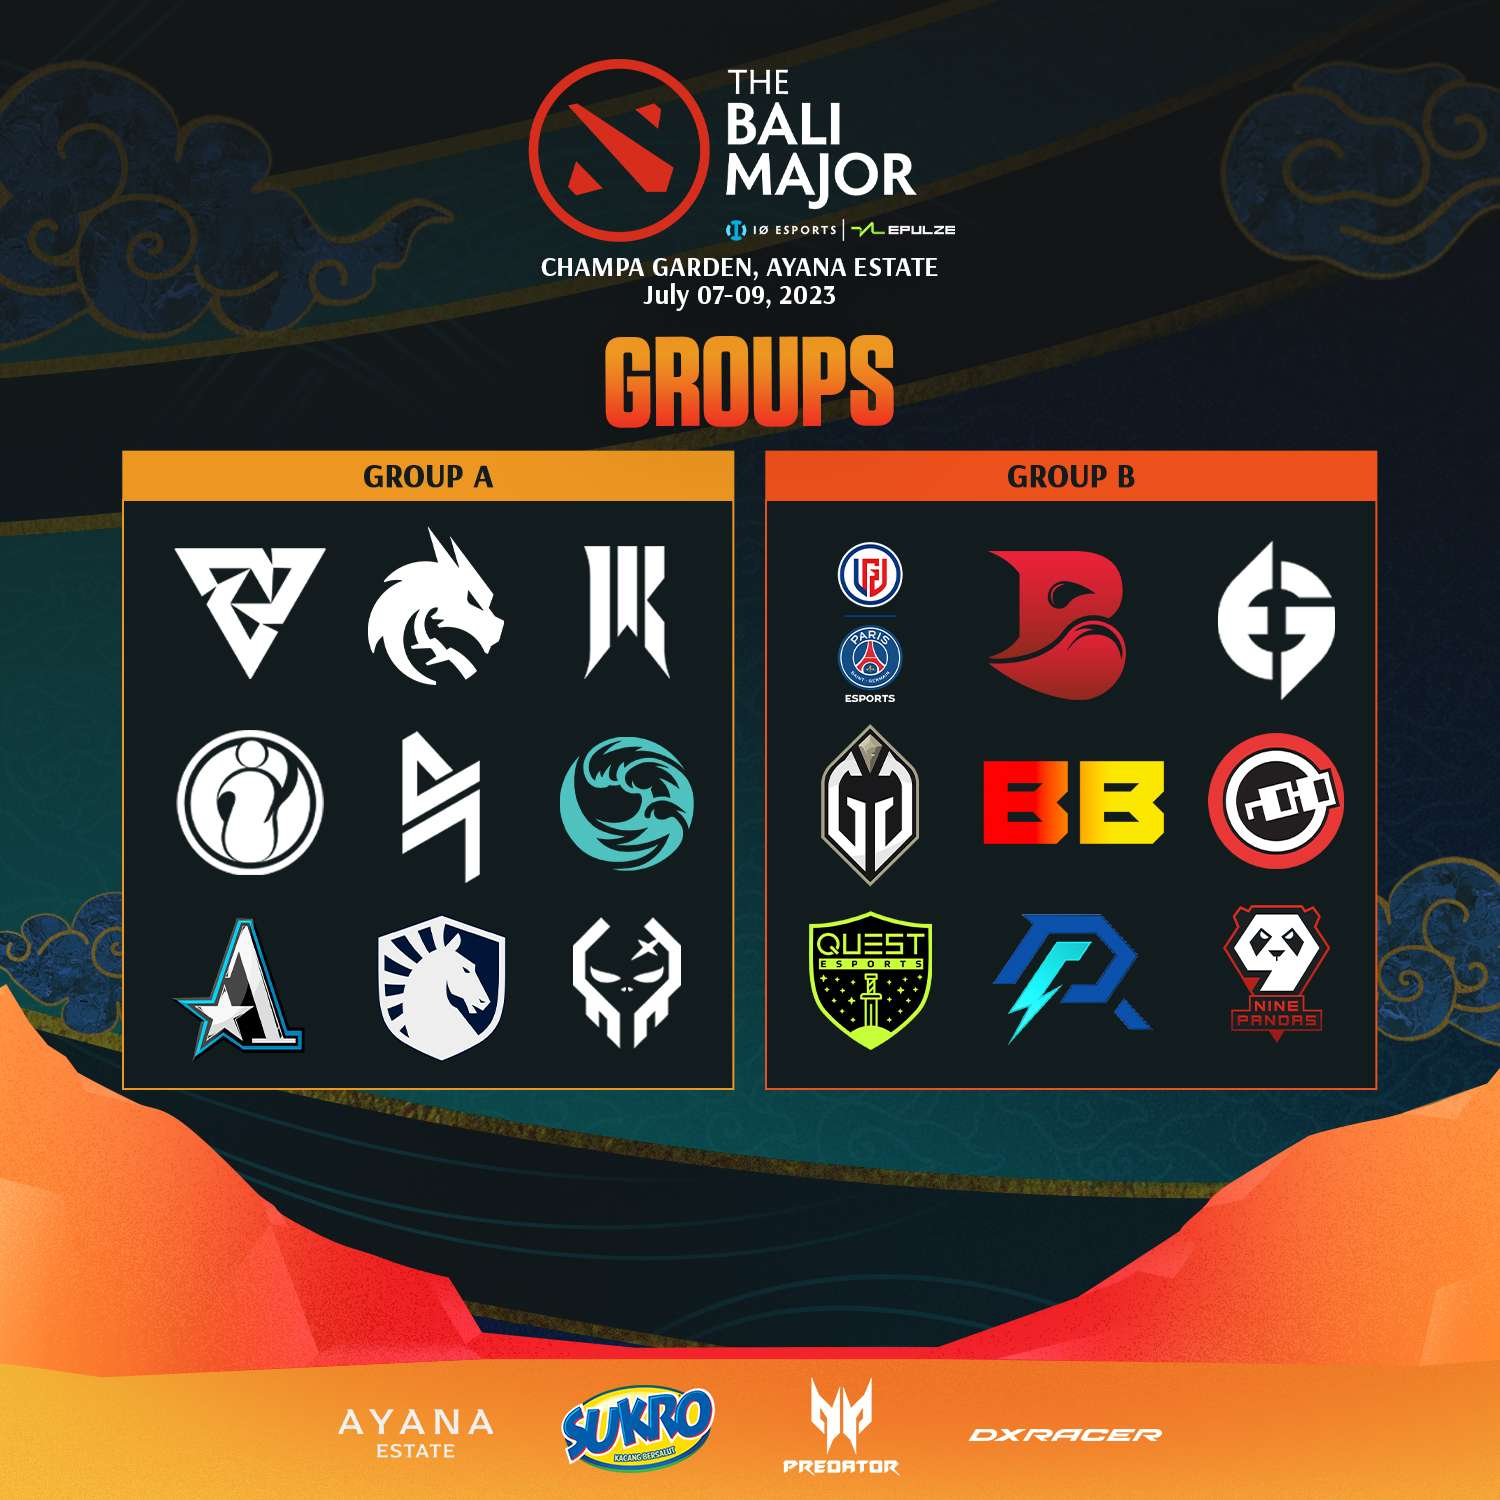 Bali Major Groups Revealed